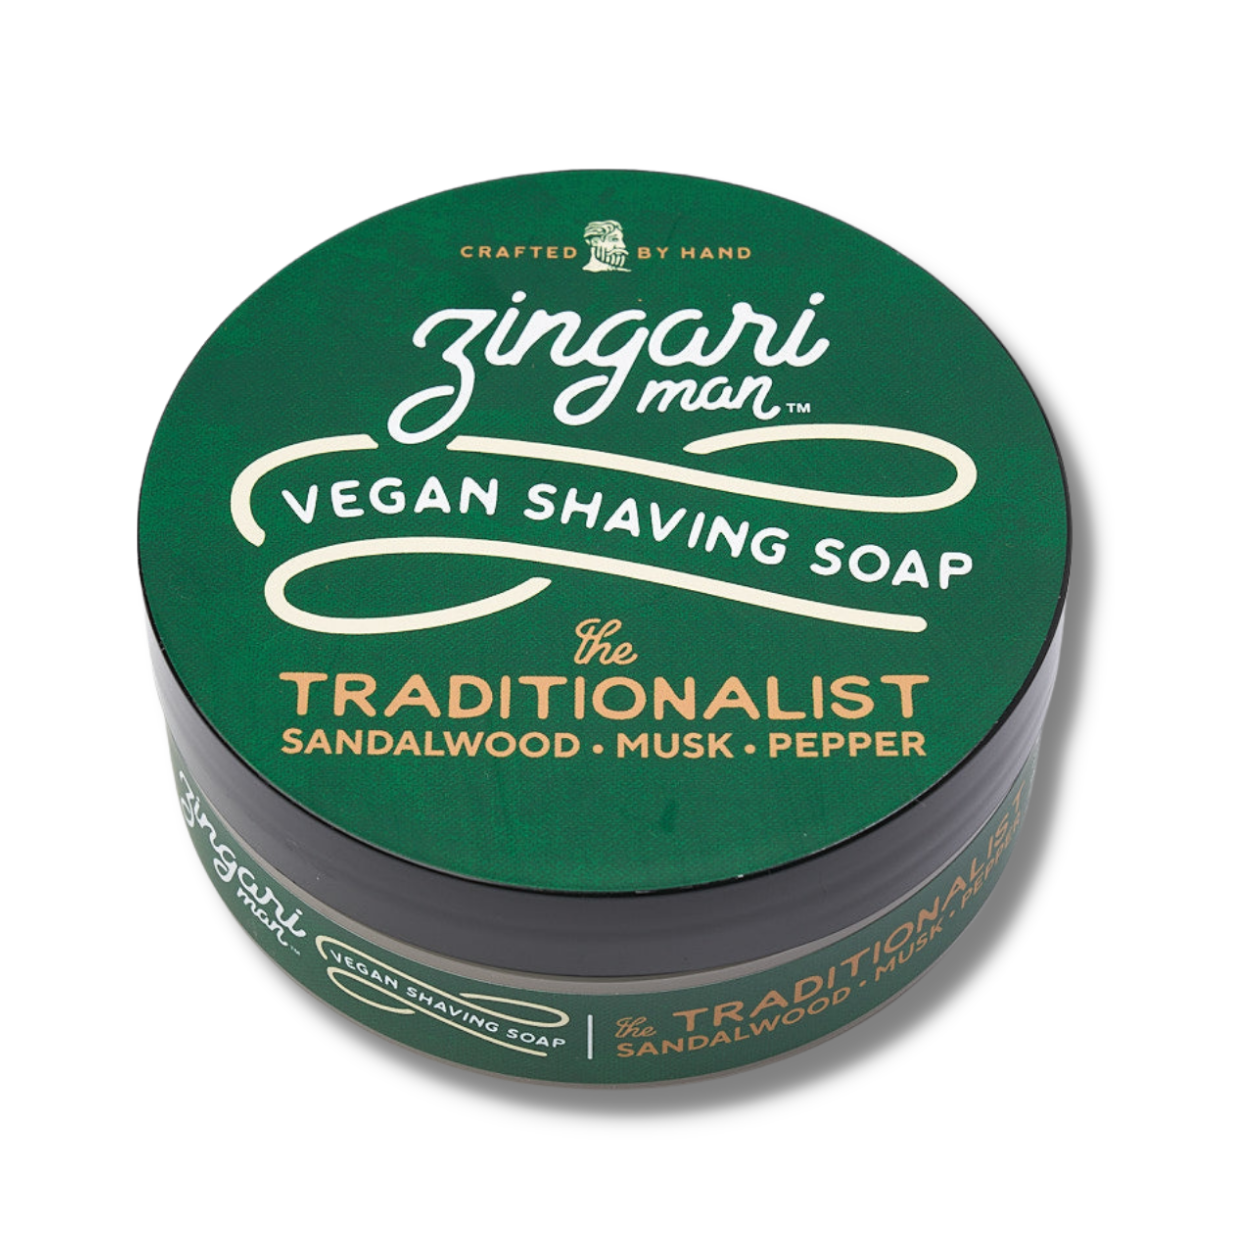 Zingari Man The Traditionalist Vegan Shaving Soap | Agent Shave